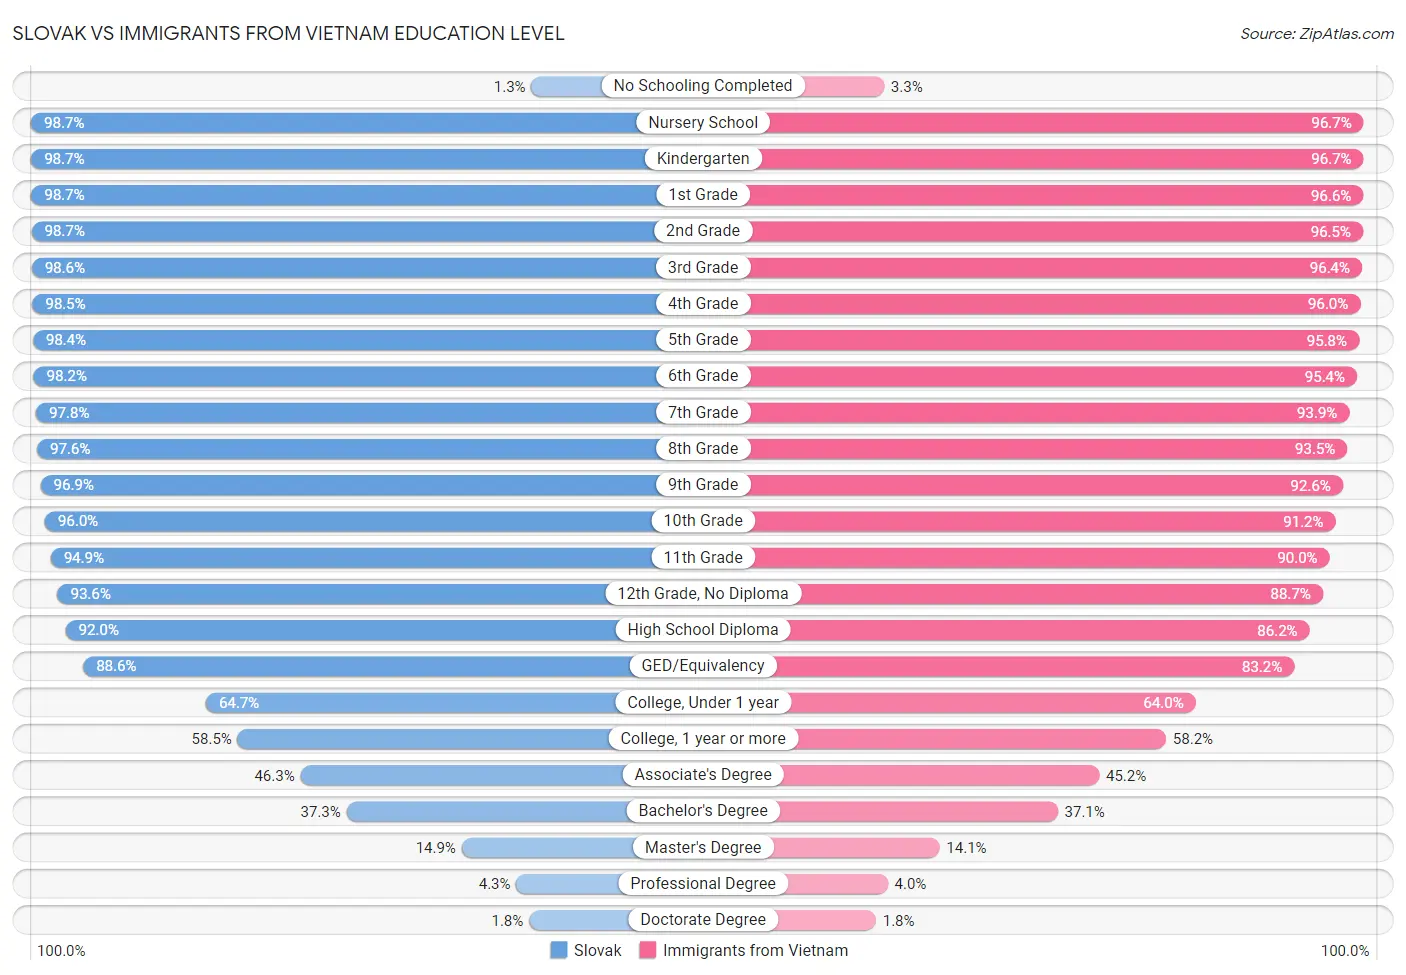 Slovak vs Immigrants from Vietnam Education Level